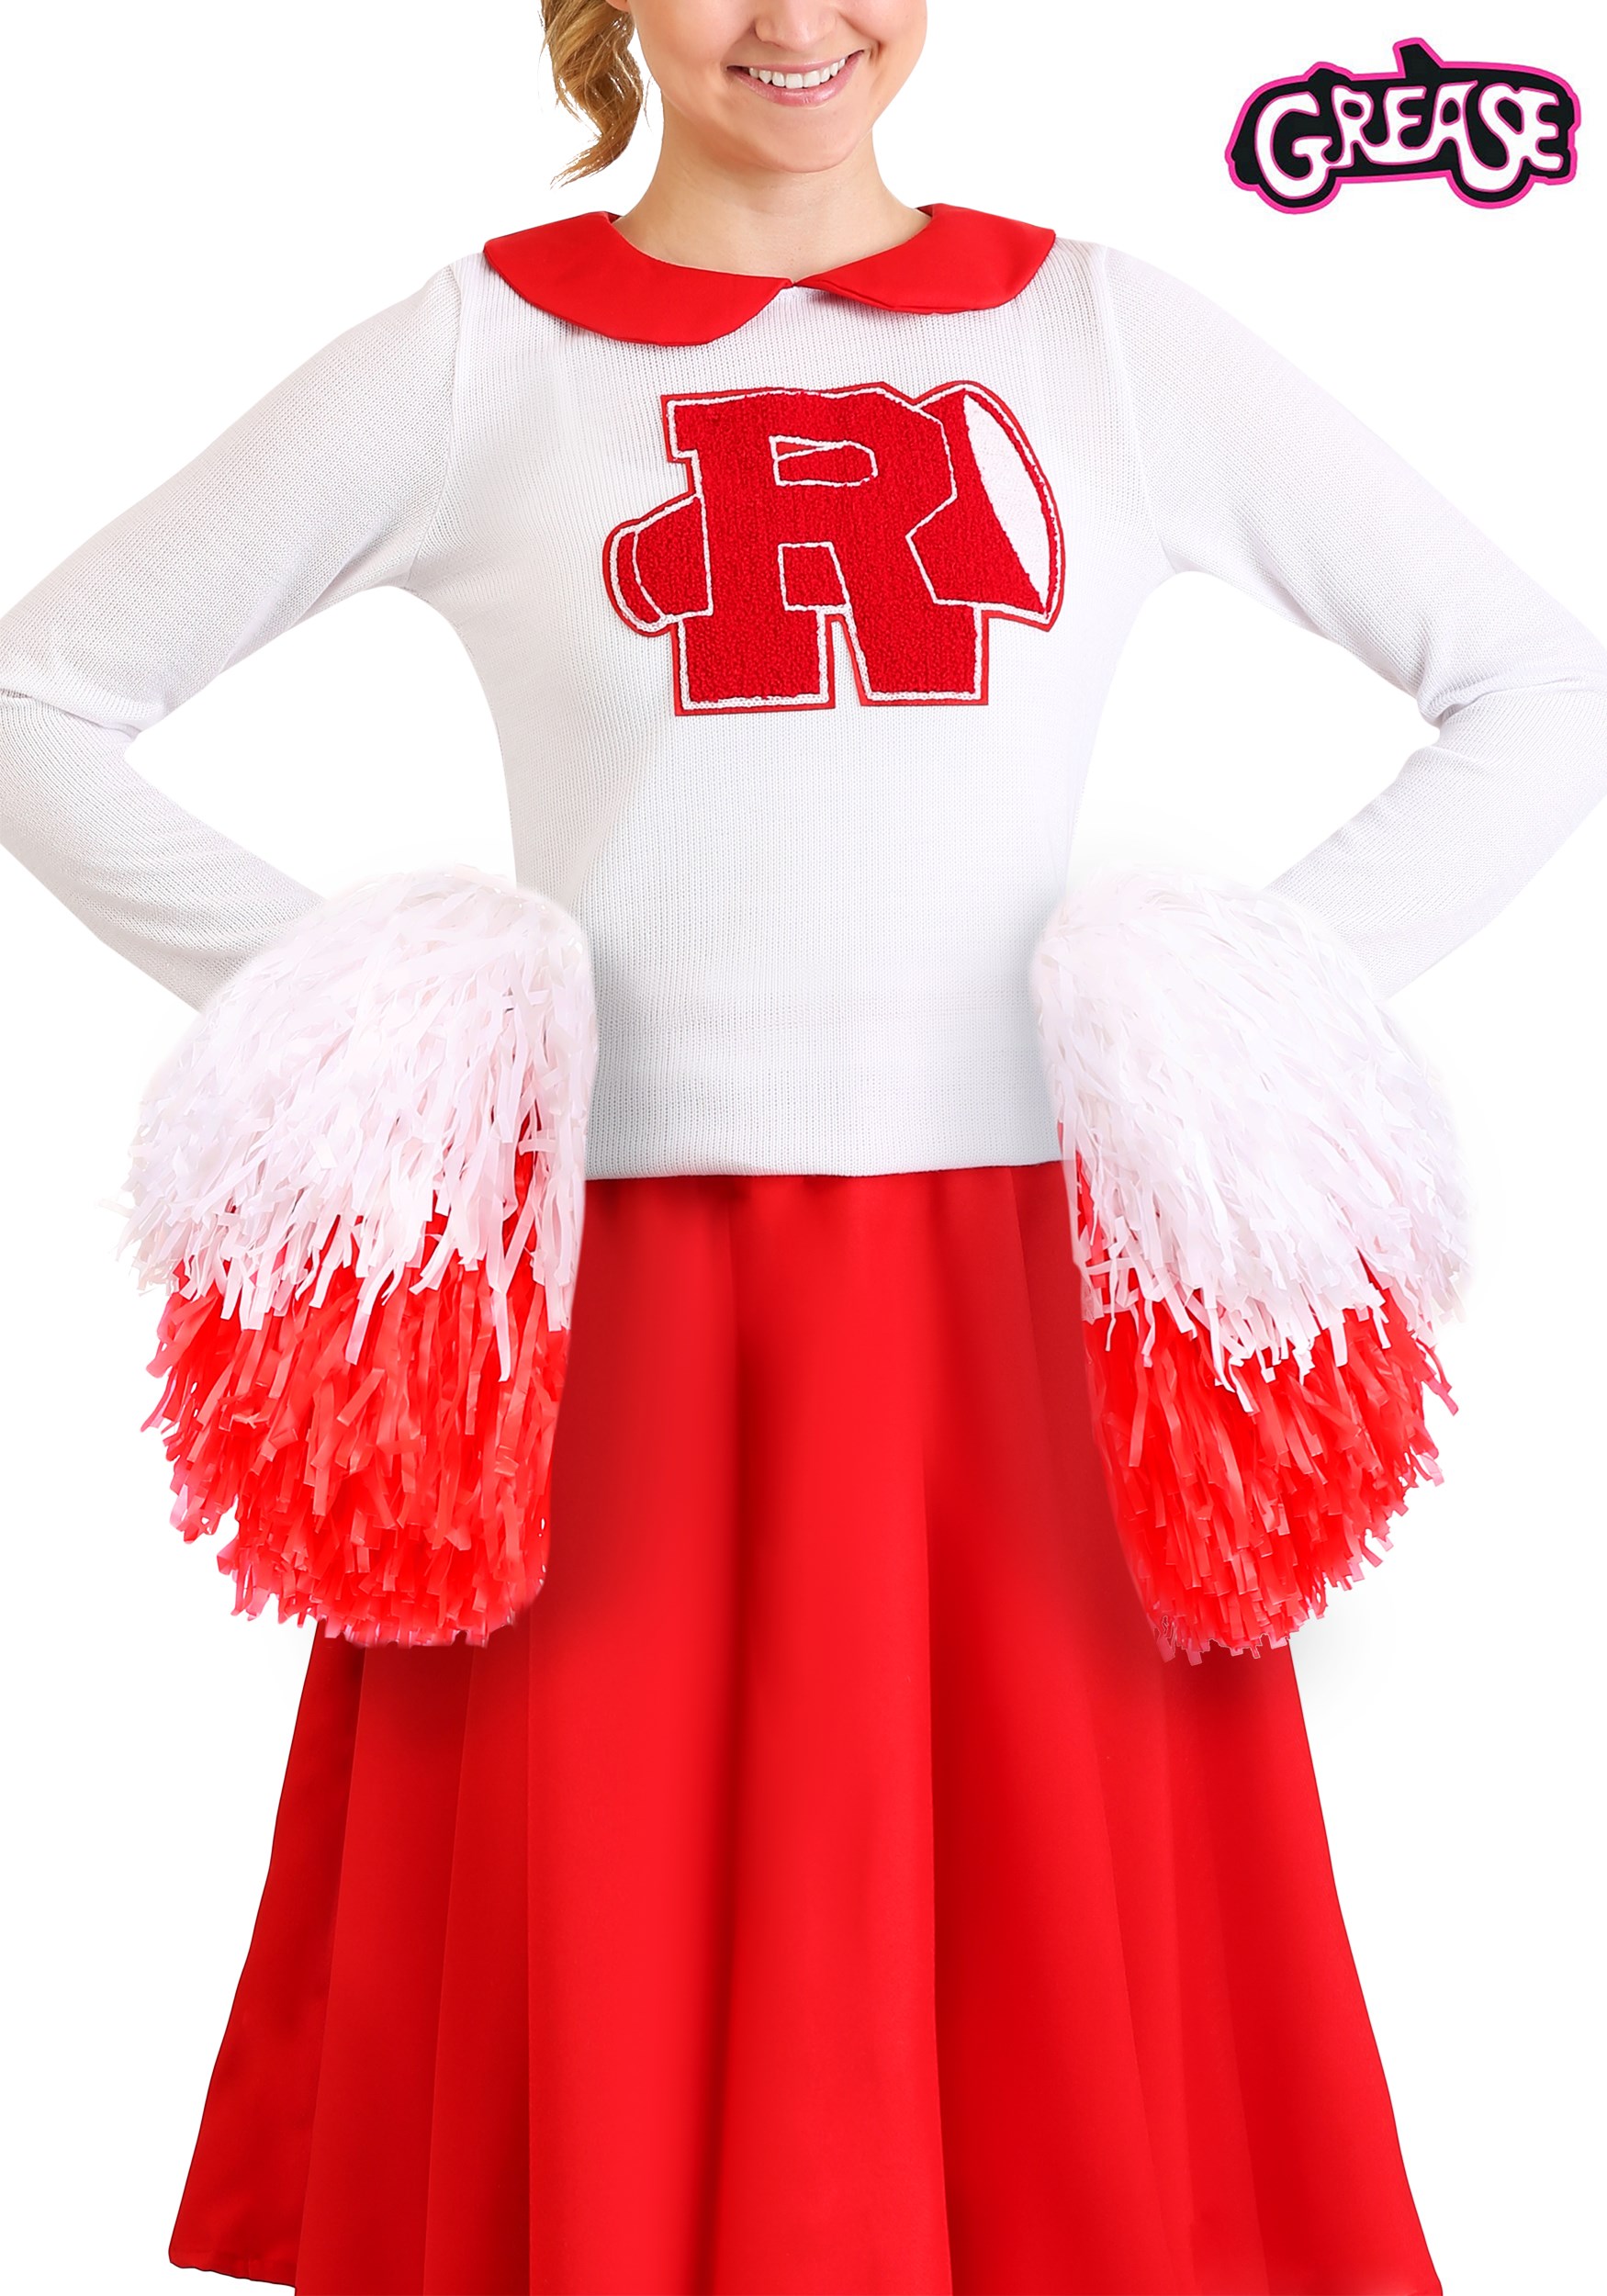 Rydell High Cheerleader Grease Pompoms